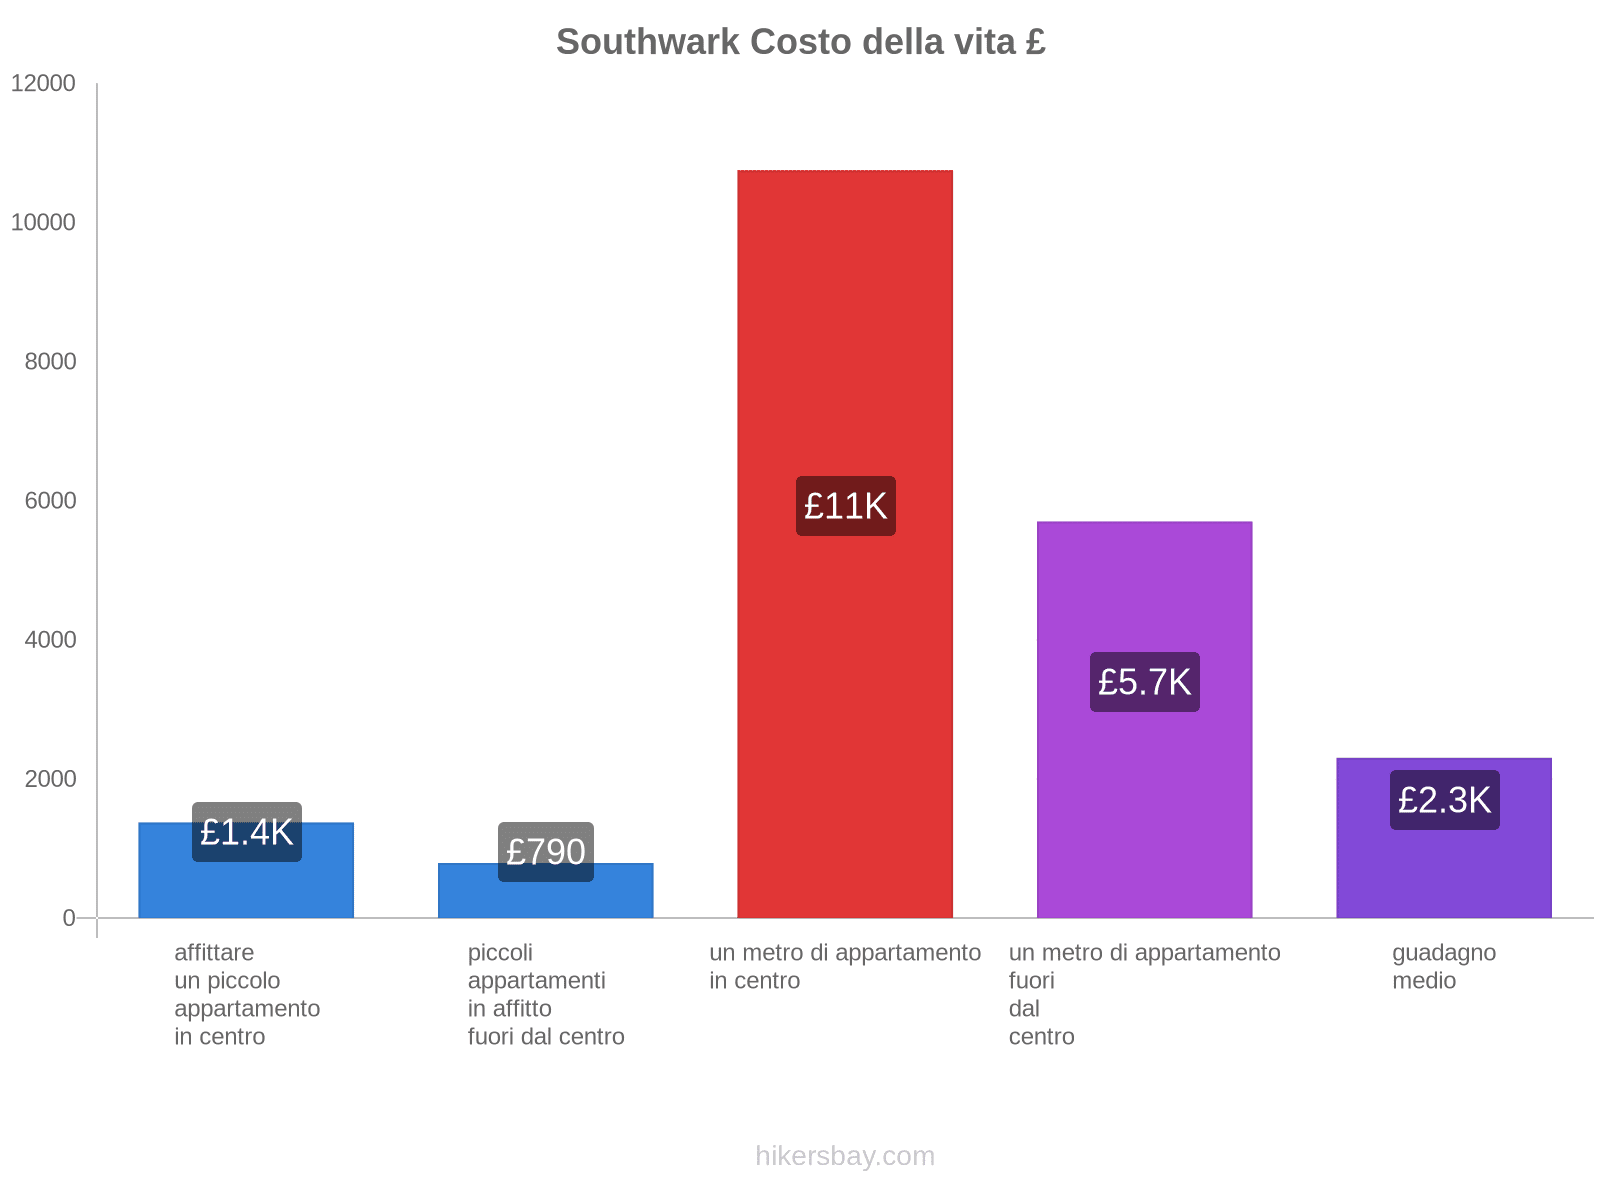 Southwark costo della vita hikersbay.com